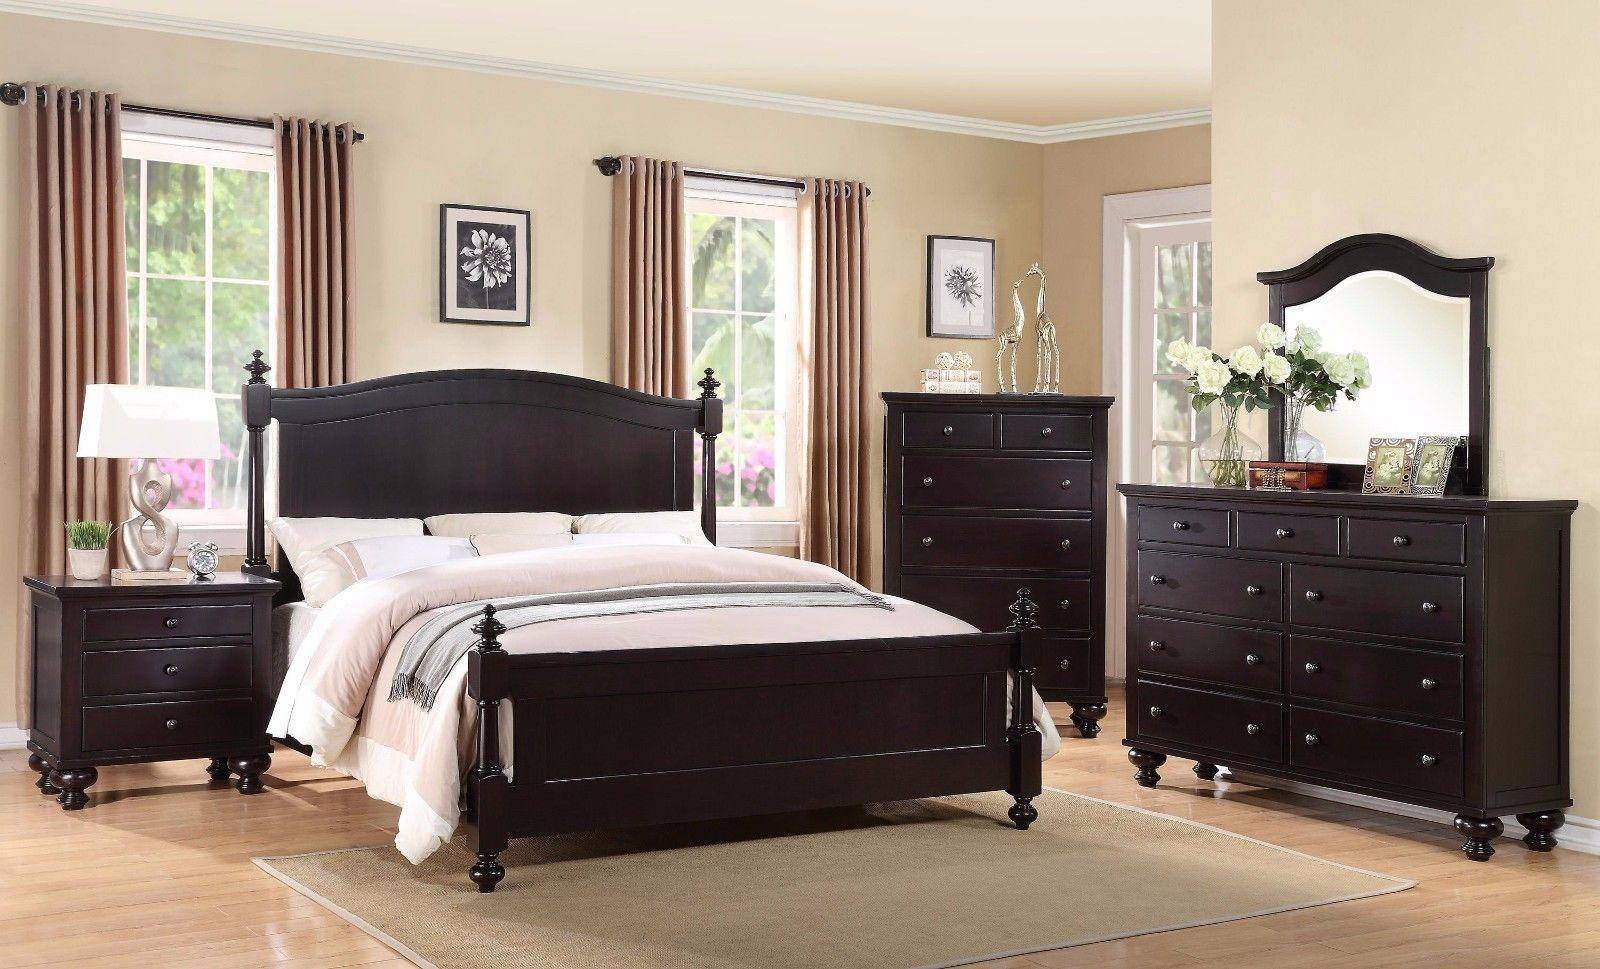 Full Size Bedroom Suite Awesome Crown Mark B1350 sommer Traditional Black Espresso King Size Bedroom Set 3 Pcs